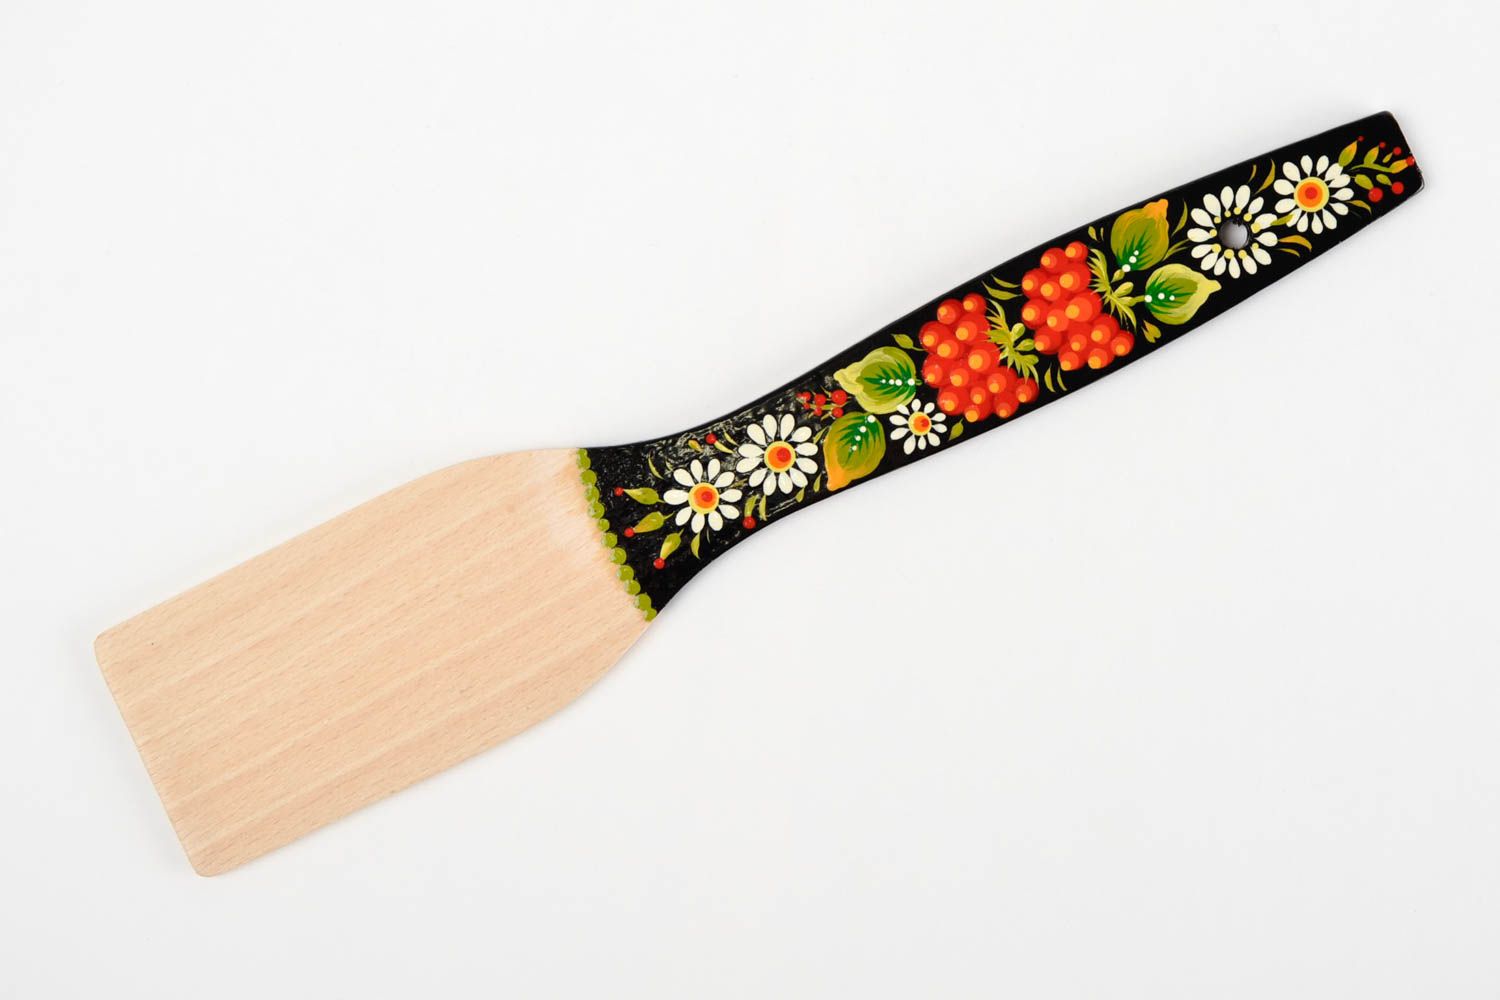 Handmade painted wooden spatula wood craft kitchen supplies interior decorating photo 3